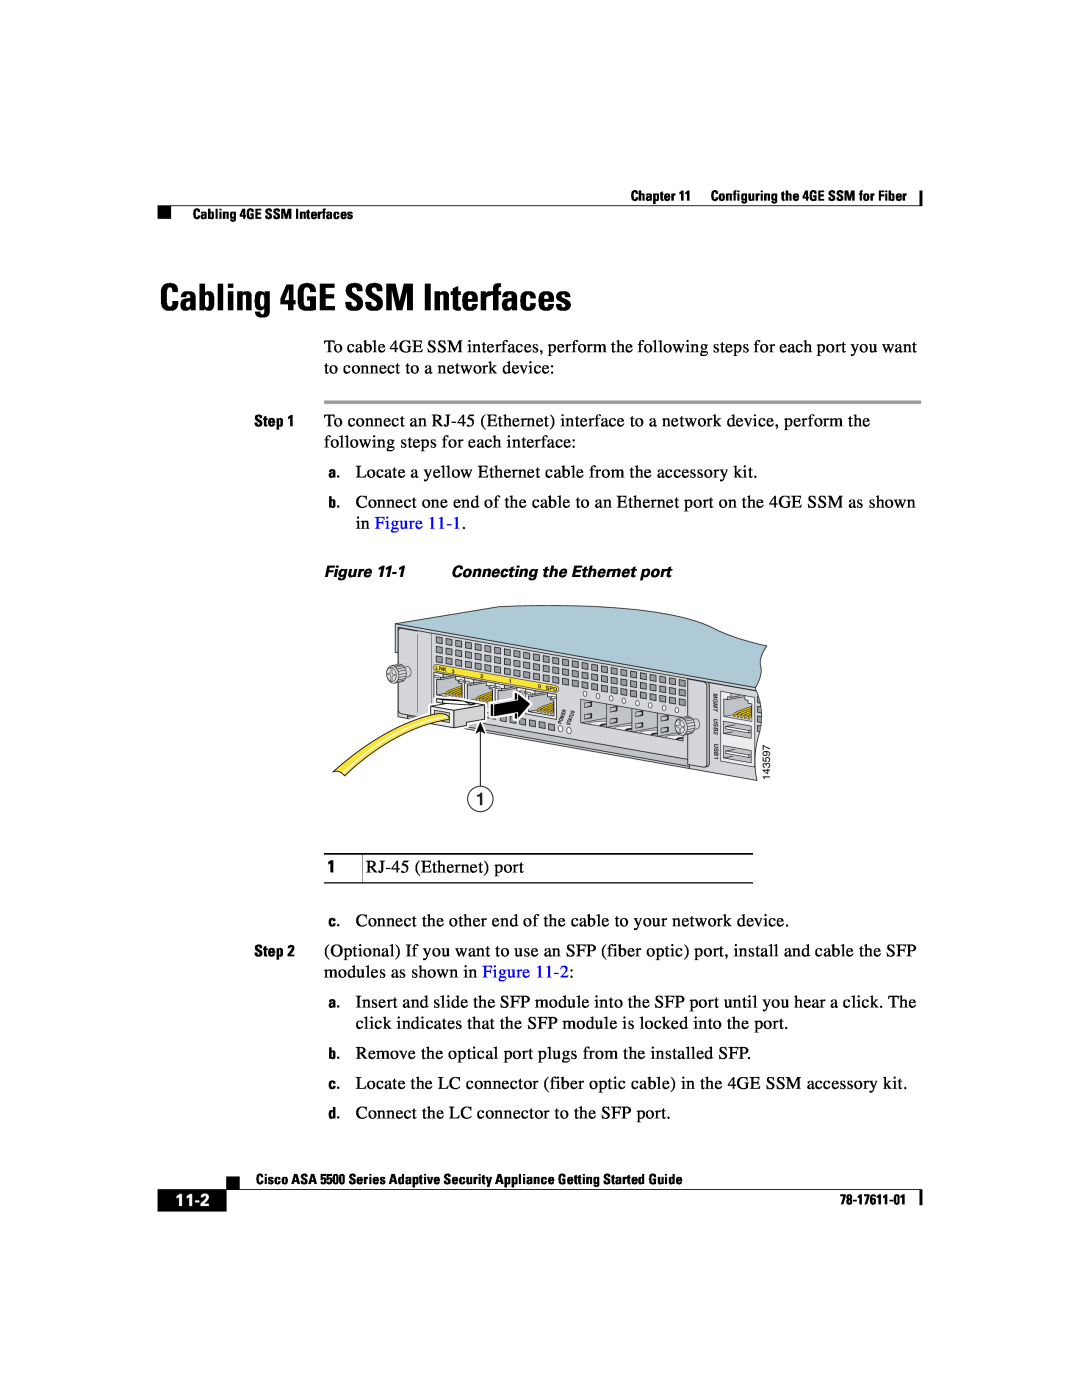 Cisco Systems ASA 5500 manual Cabling 4GE SSM Interfaces, 11-2 